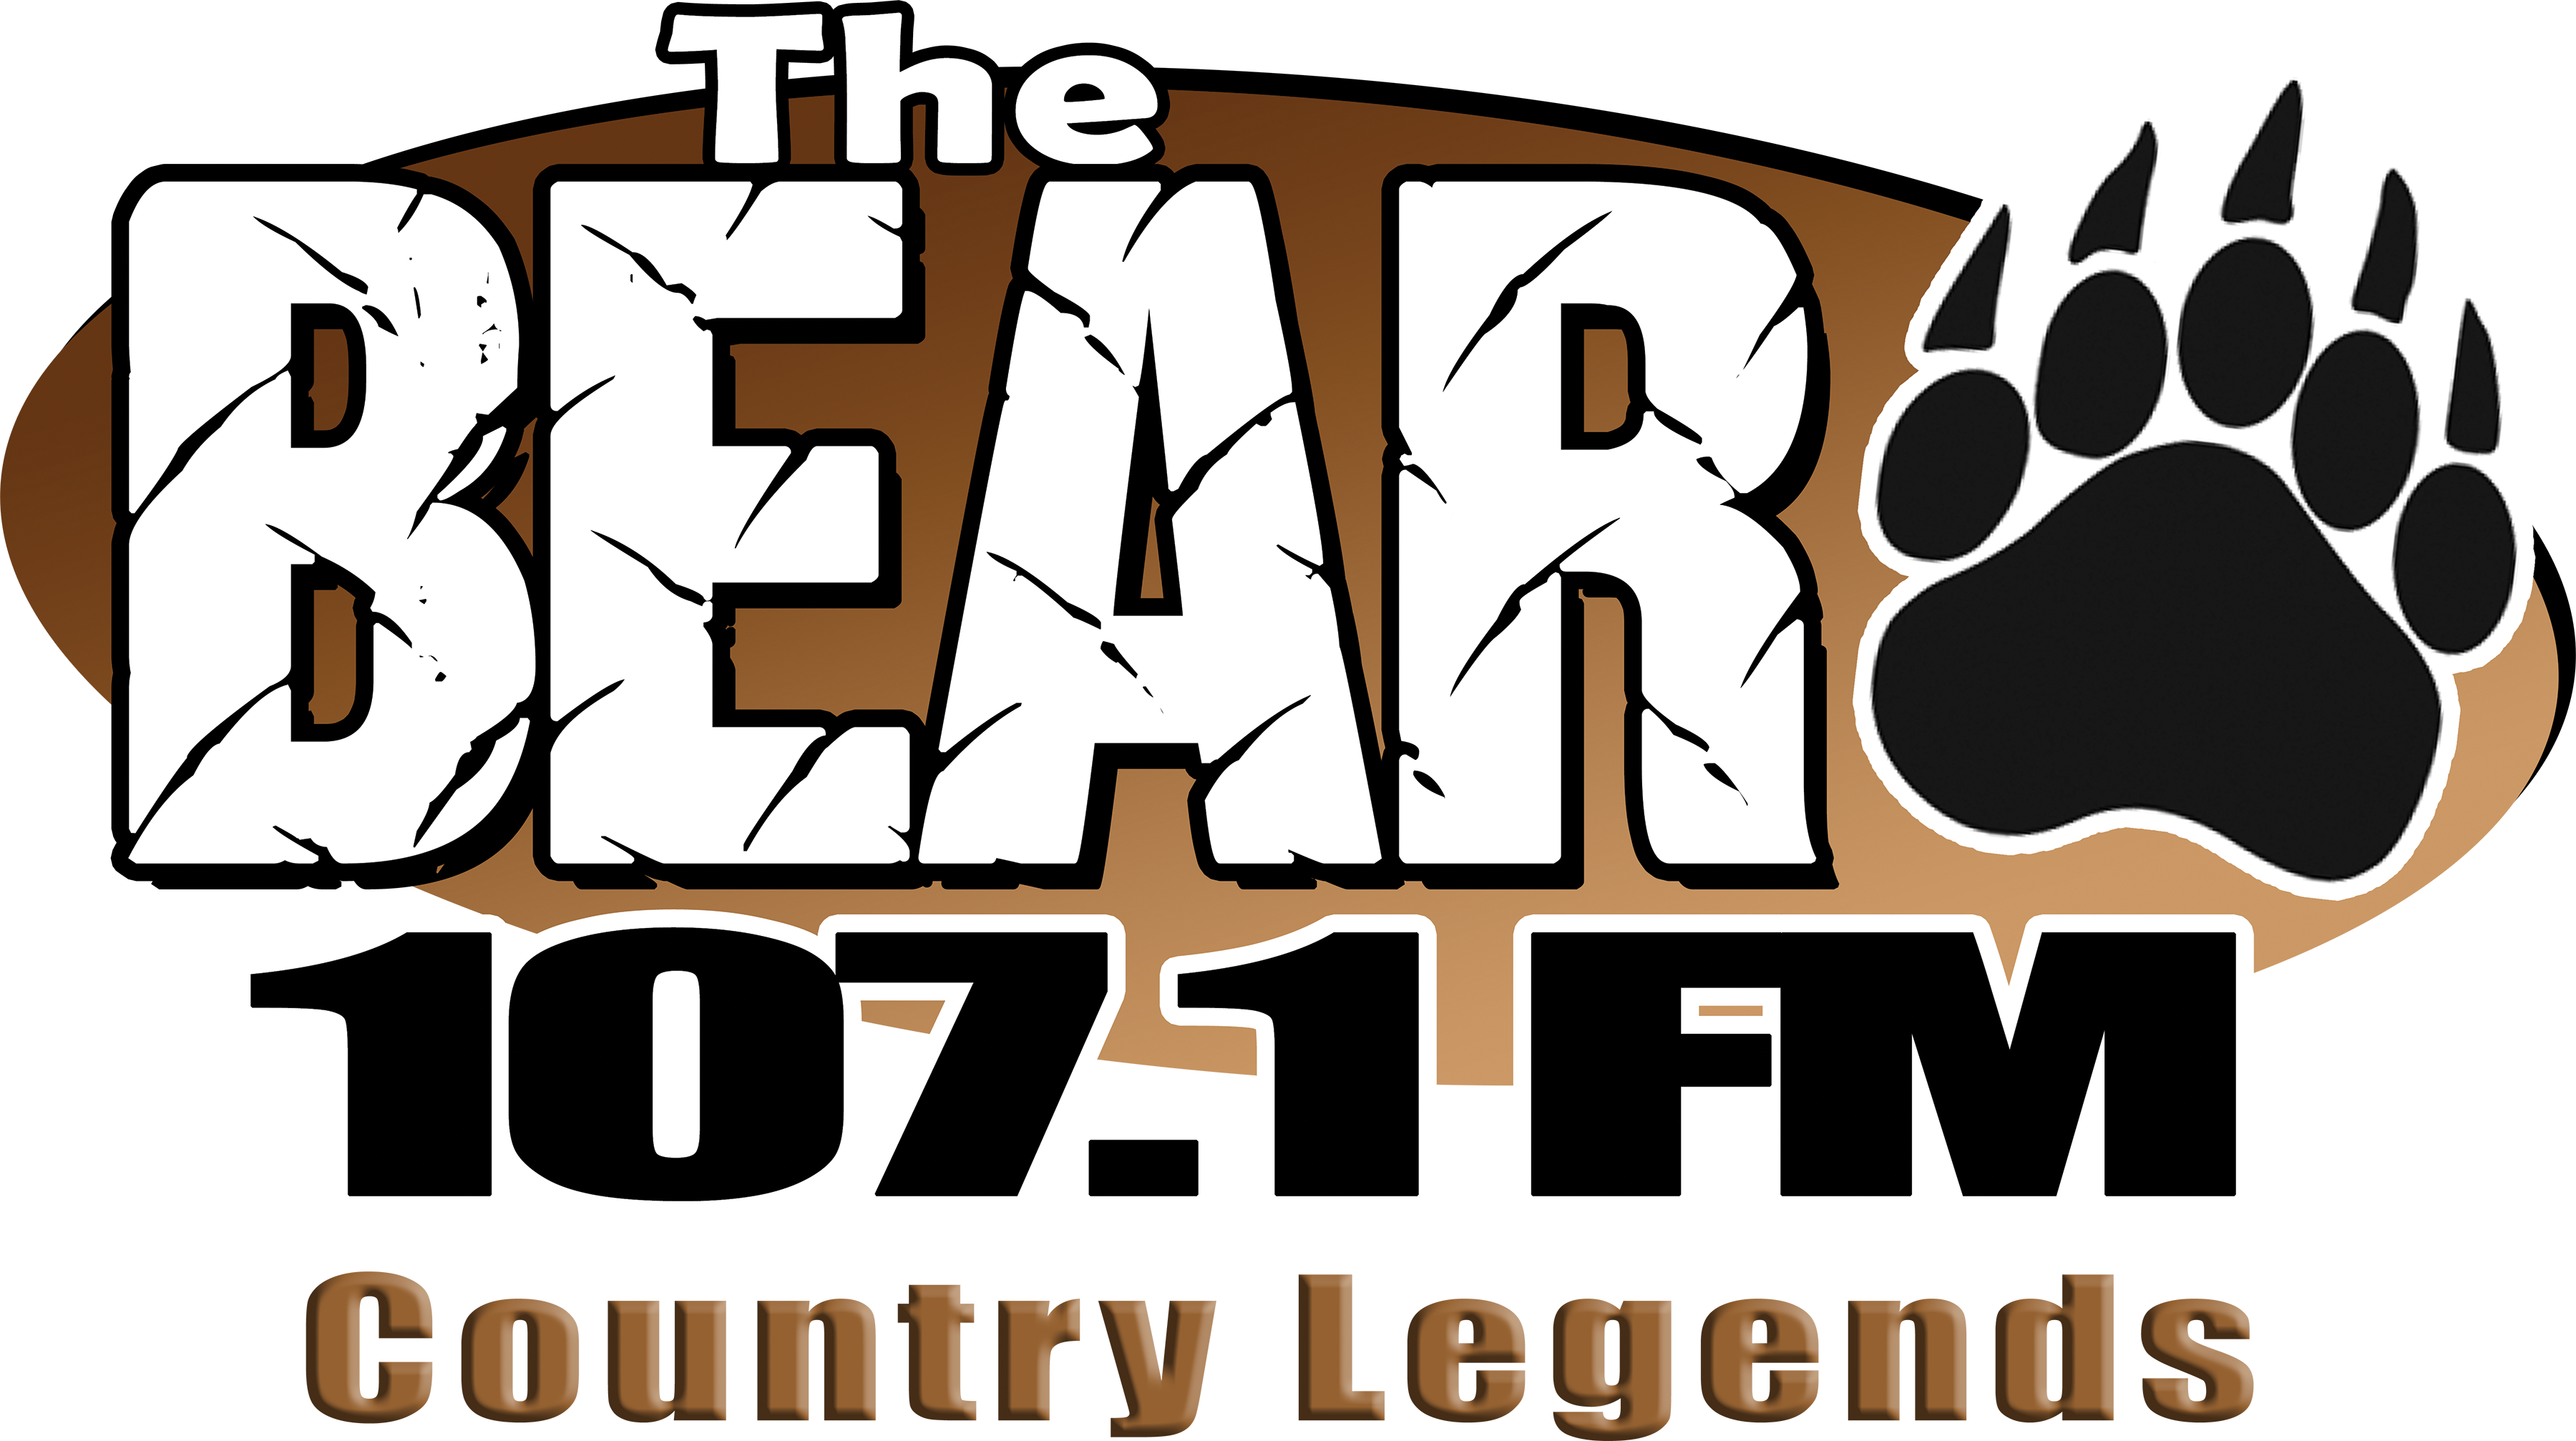 1071 The Bear Logo